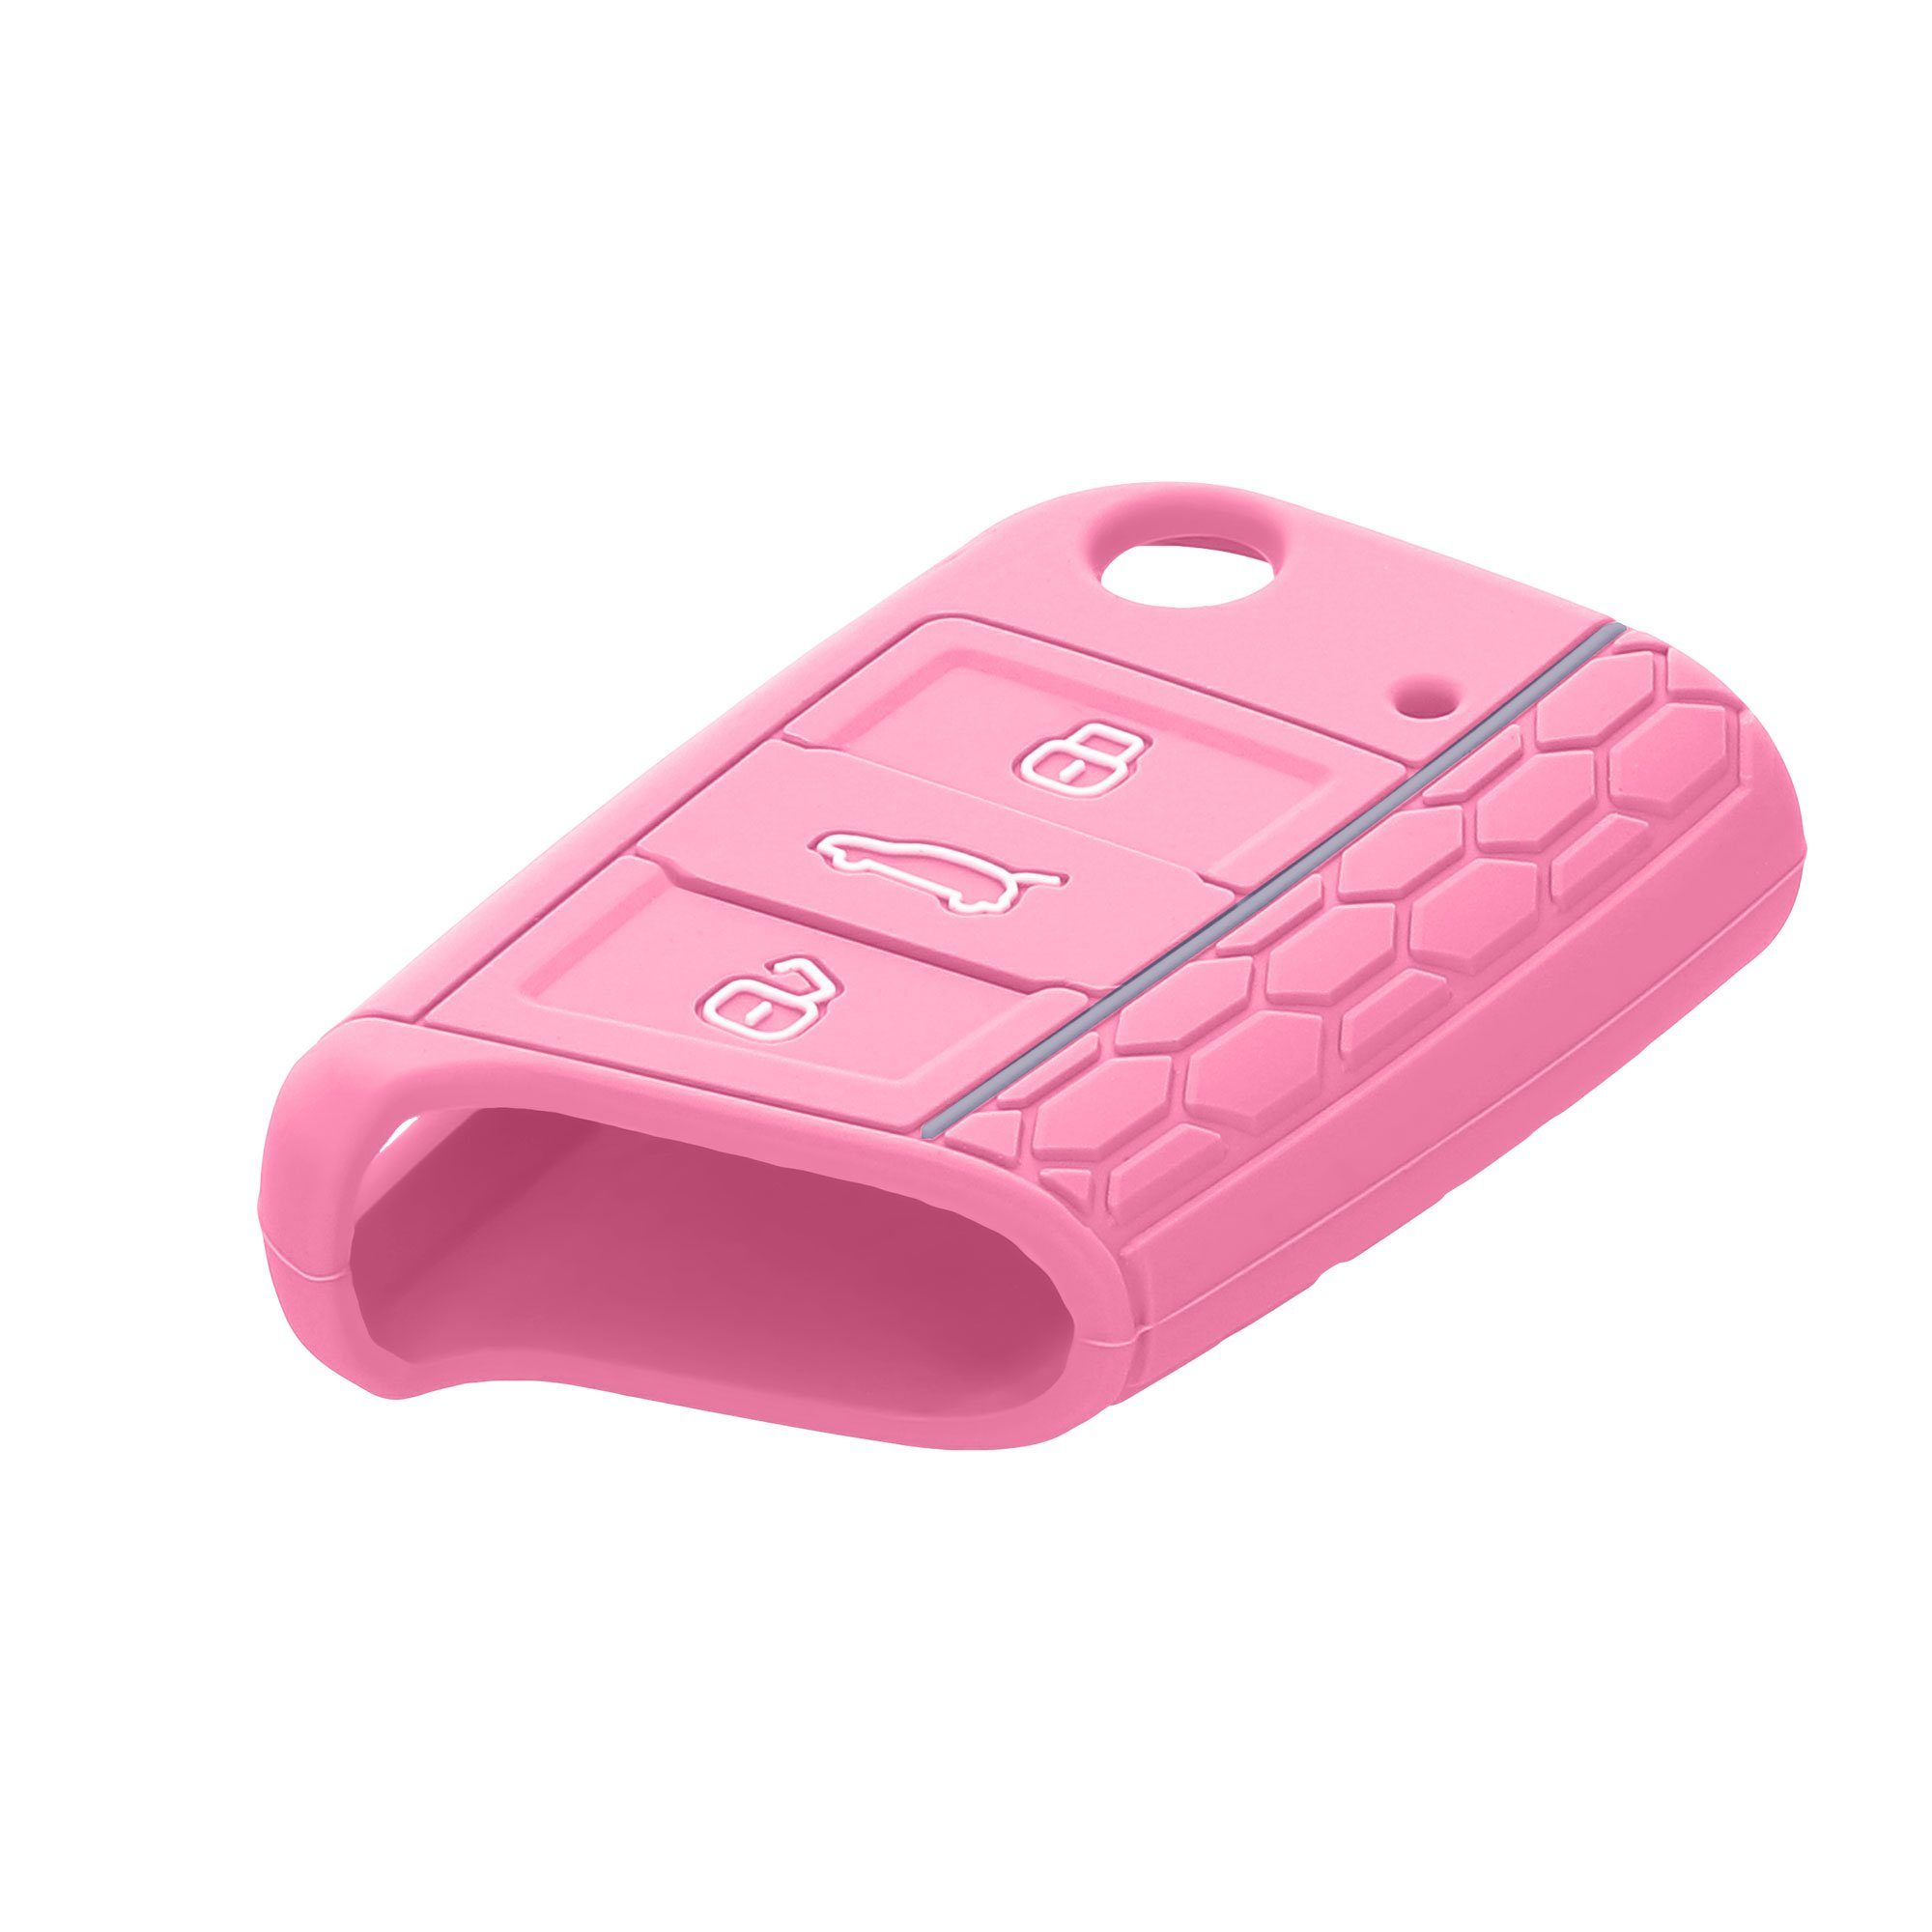 Hülle Rosa-Pastelllila Autoschlüssel Schlüsseltasche MK7, Schlüsselhülle Silikon 7 kwmobile VW Case Schlüssel Golf Cover für